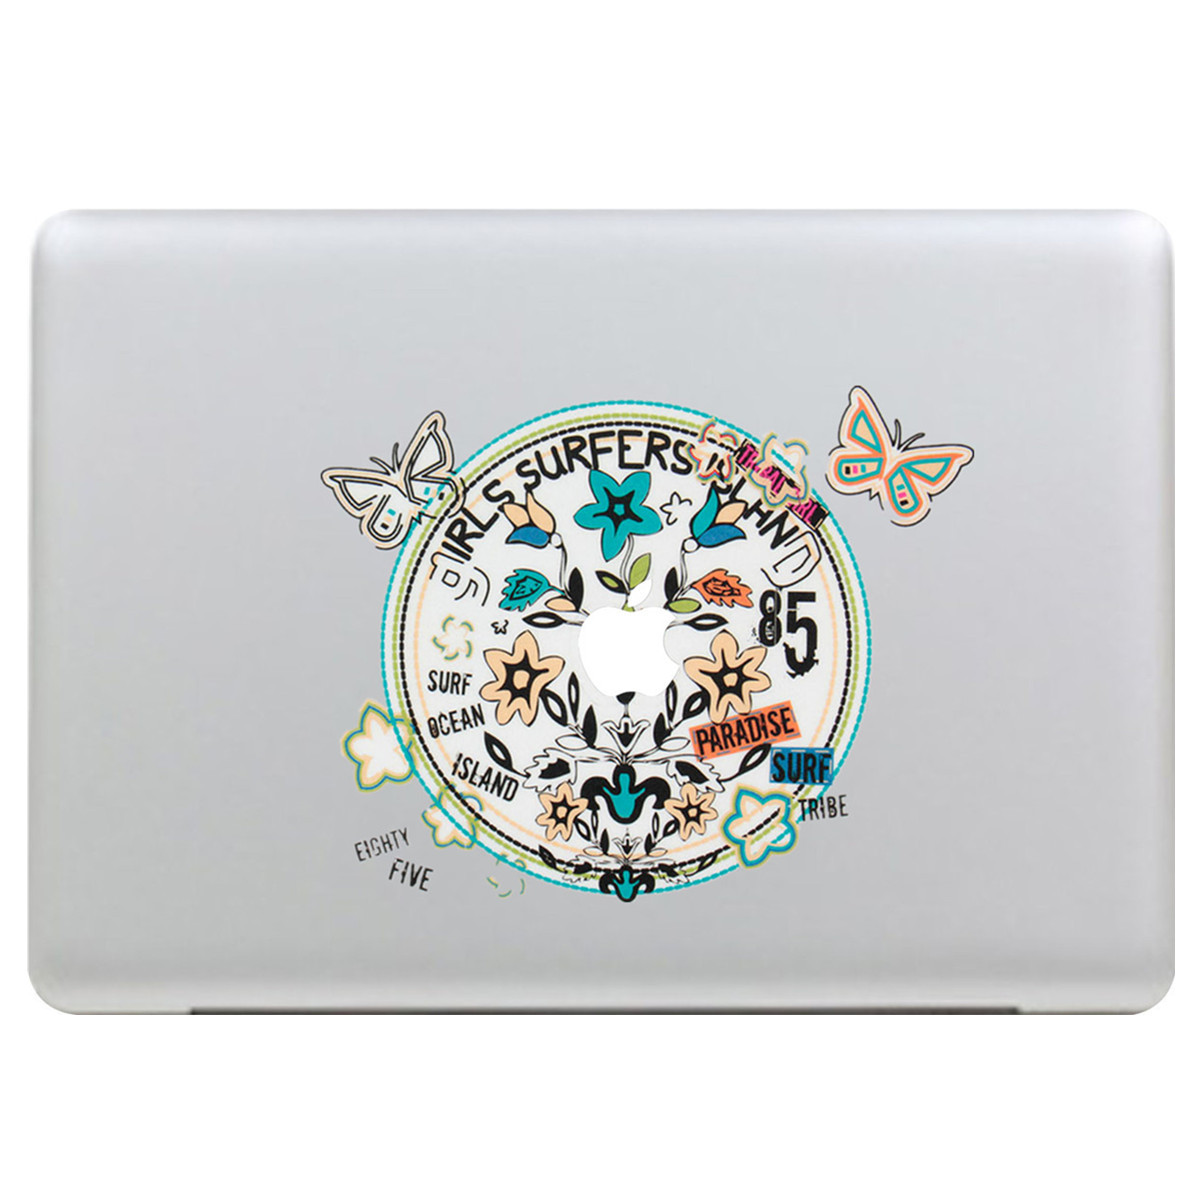 Butterfly-Wreath-Decal-Vinyl-Sticker-Skin-Shell-Decoration-Laptop-Sticker-Decal-For-Apple-MacBook-1033542-1